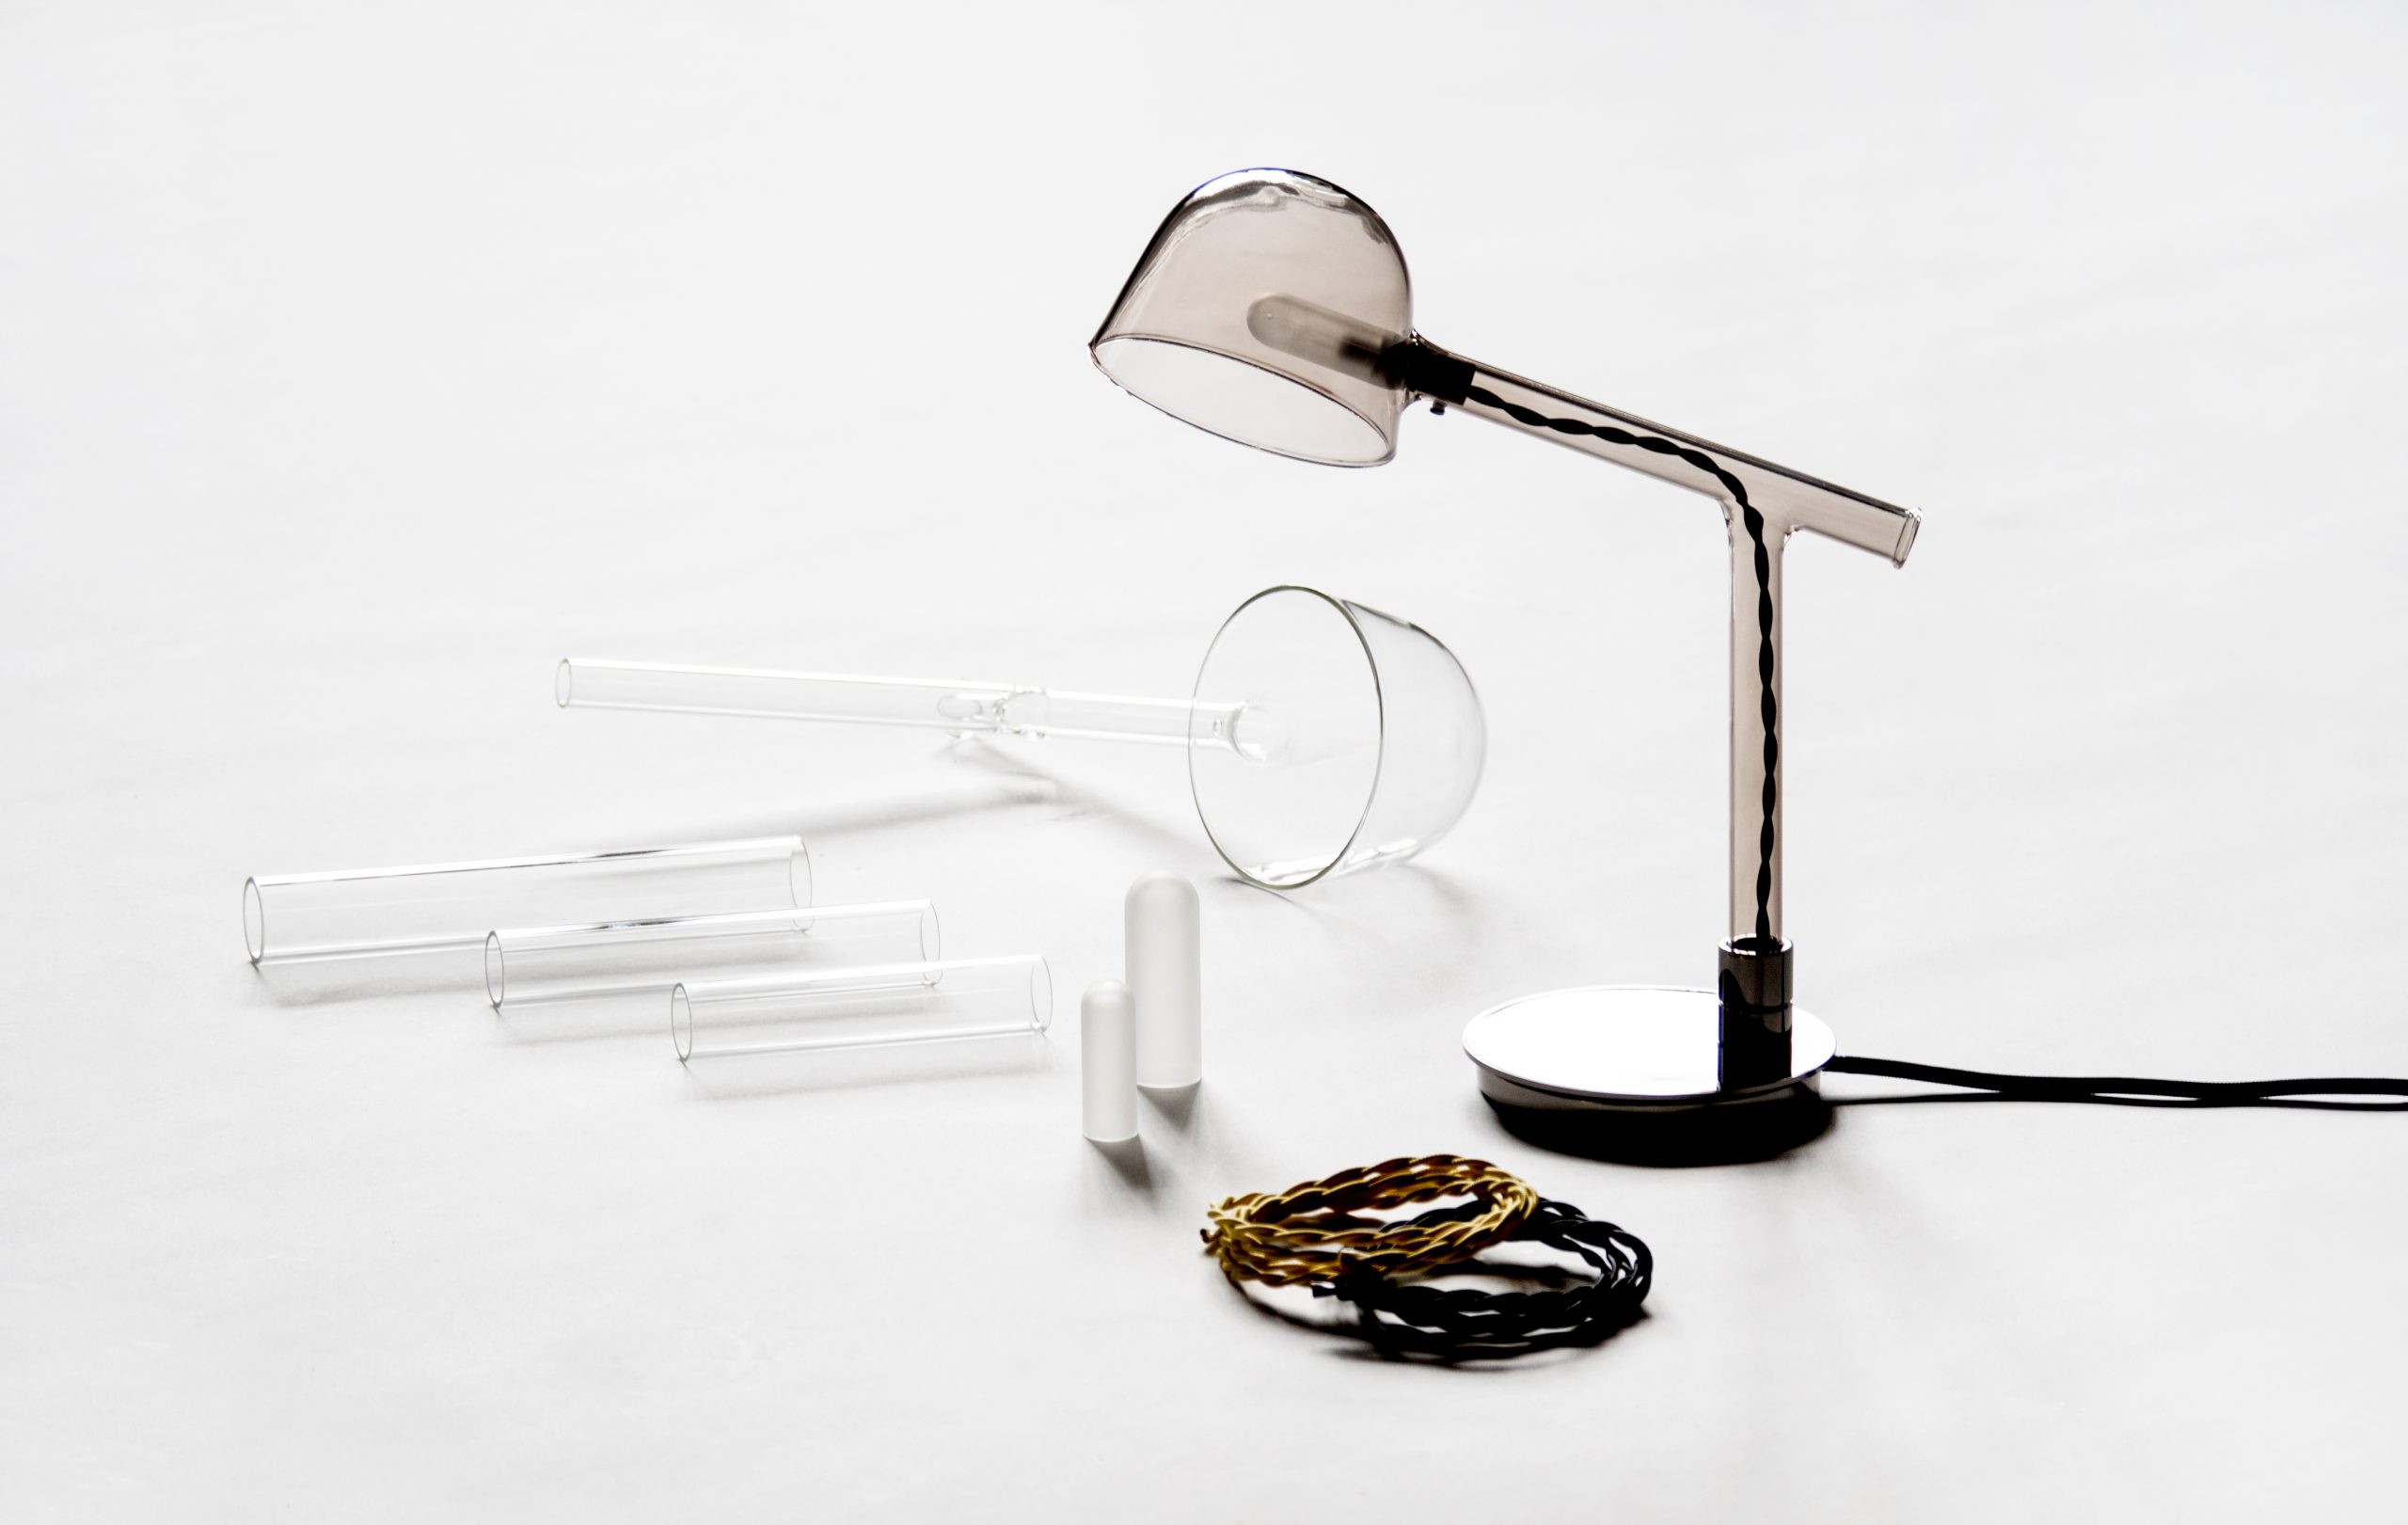 Labo borosilicate glass lamp by Debiasi Sandri for Penta